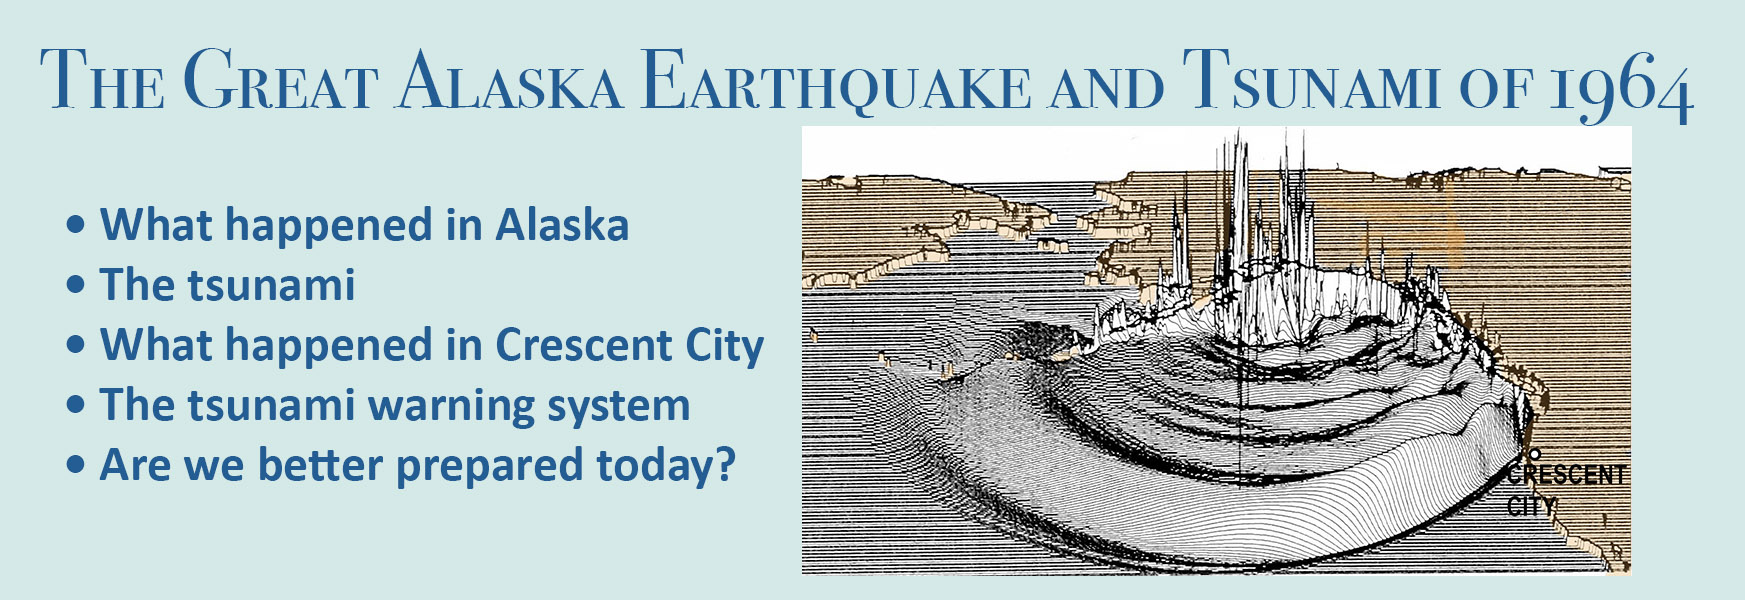 1964 Great Alaska earthquake & tsunami slideshow